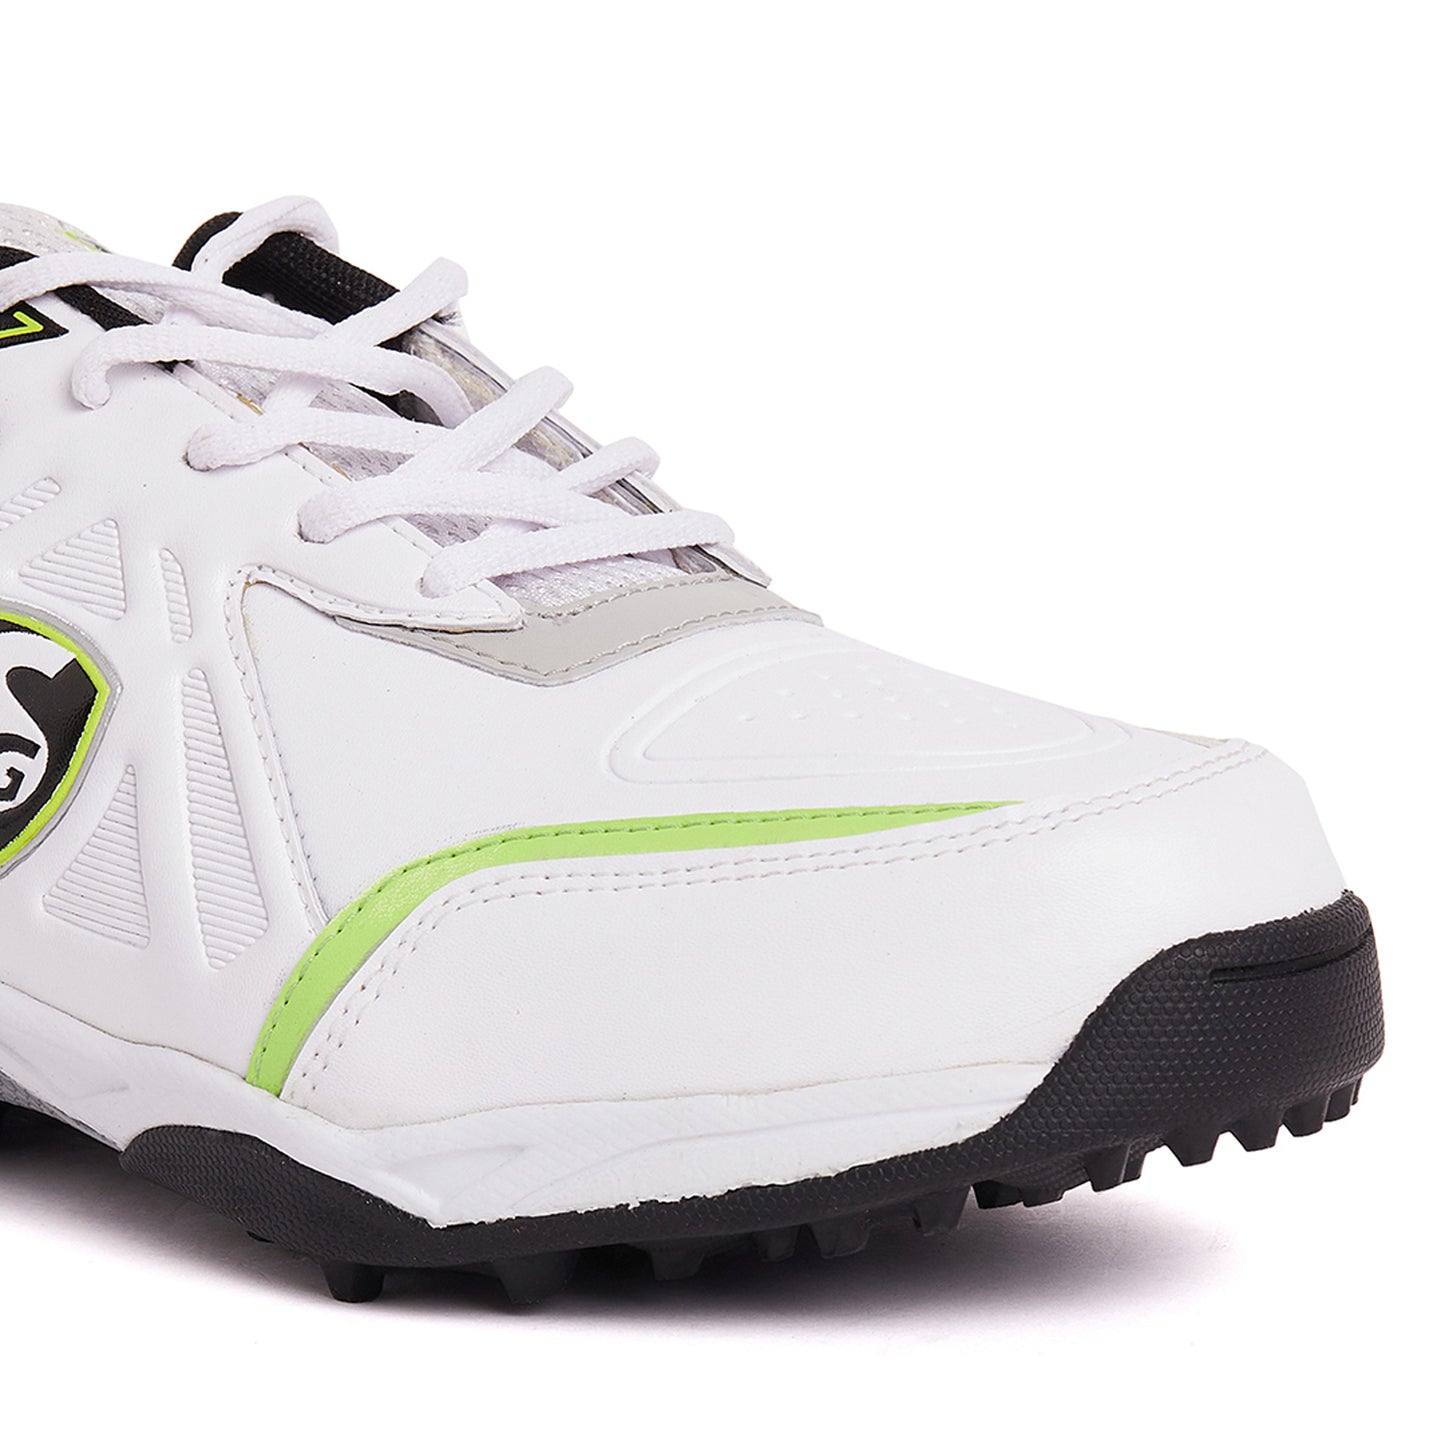 SG Scorer 5.0 Rubber Spikes Cricket Shoes - Best Price online Prokicksports.com